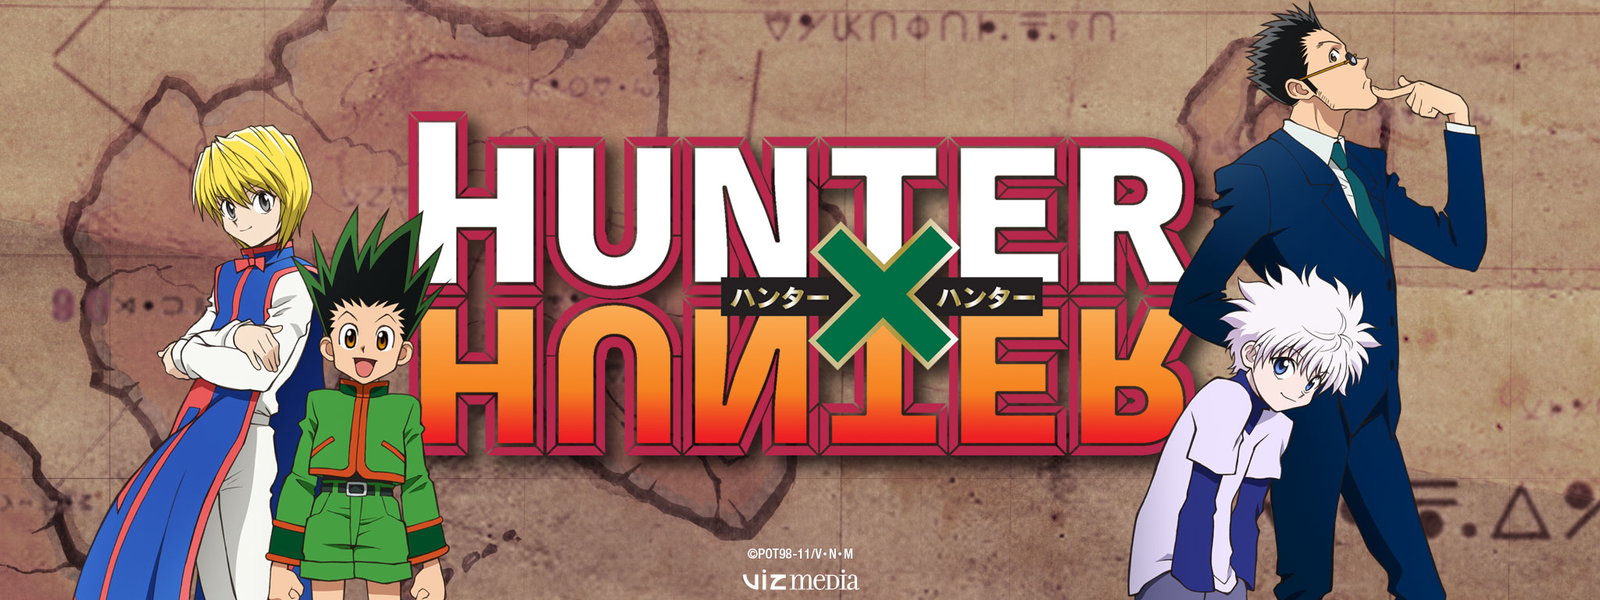 Hunter x Hunter logo